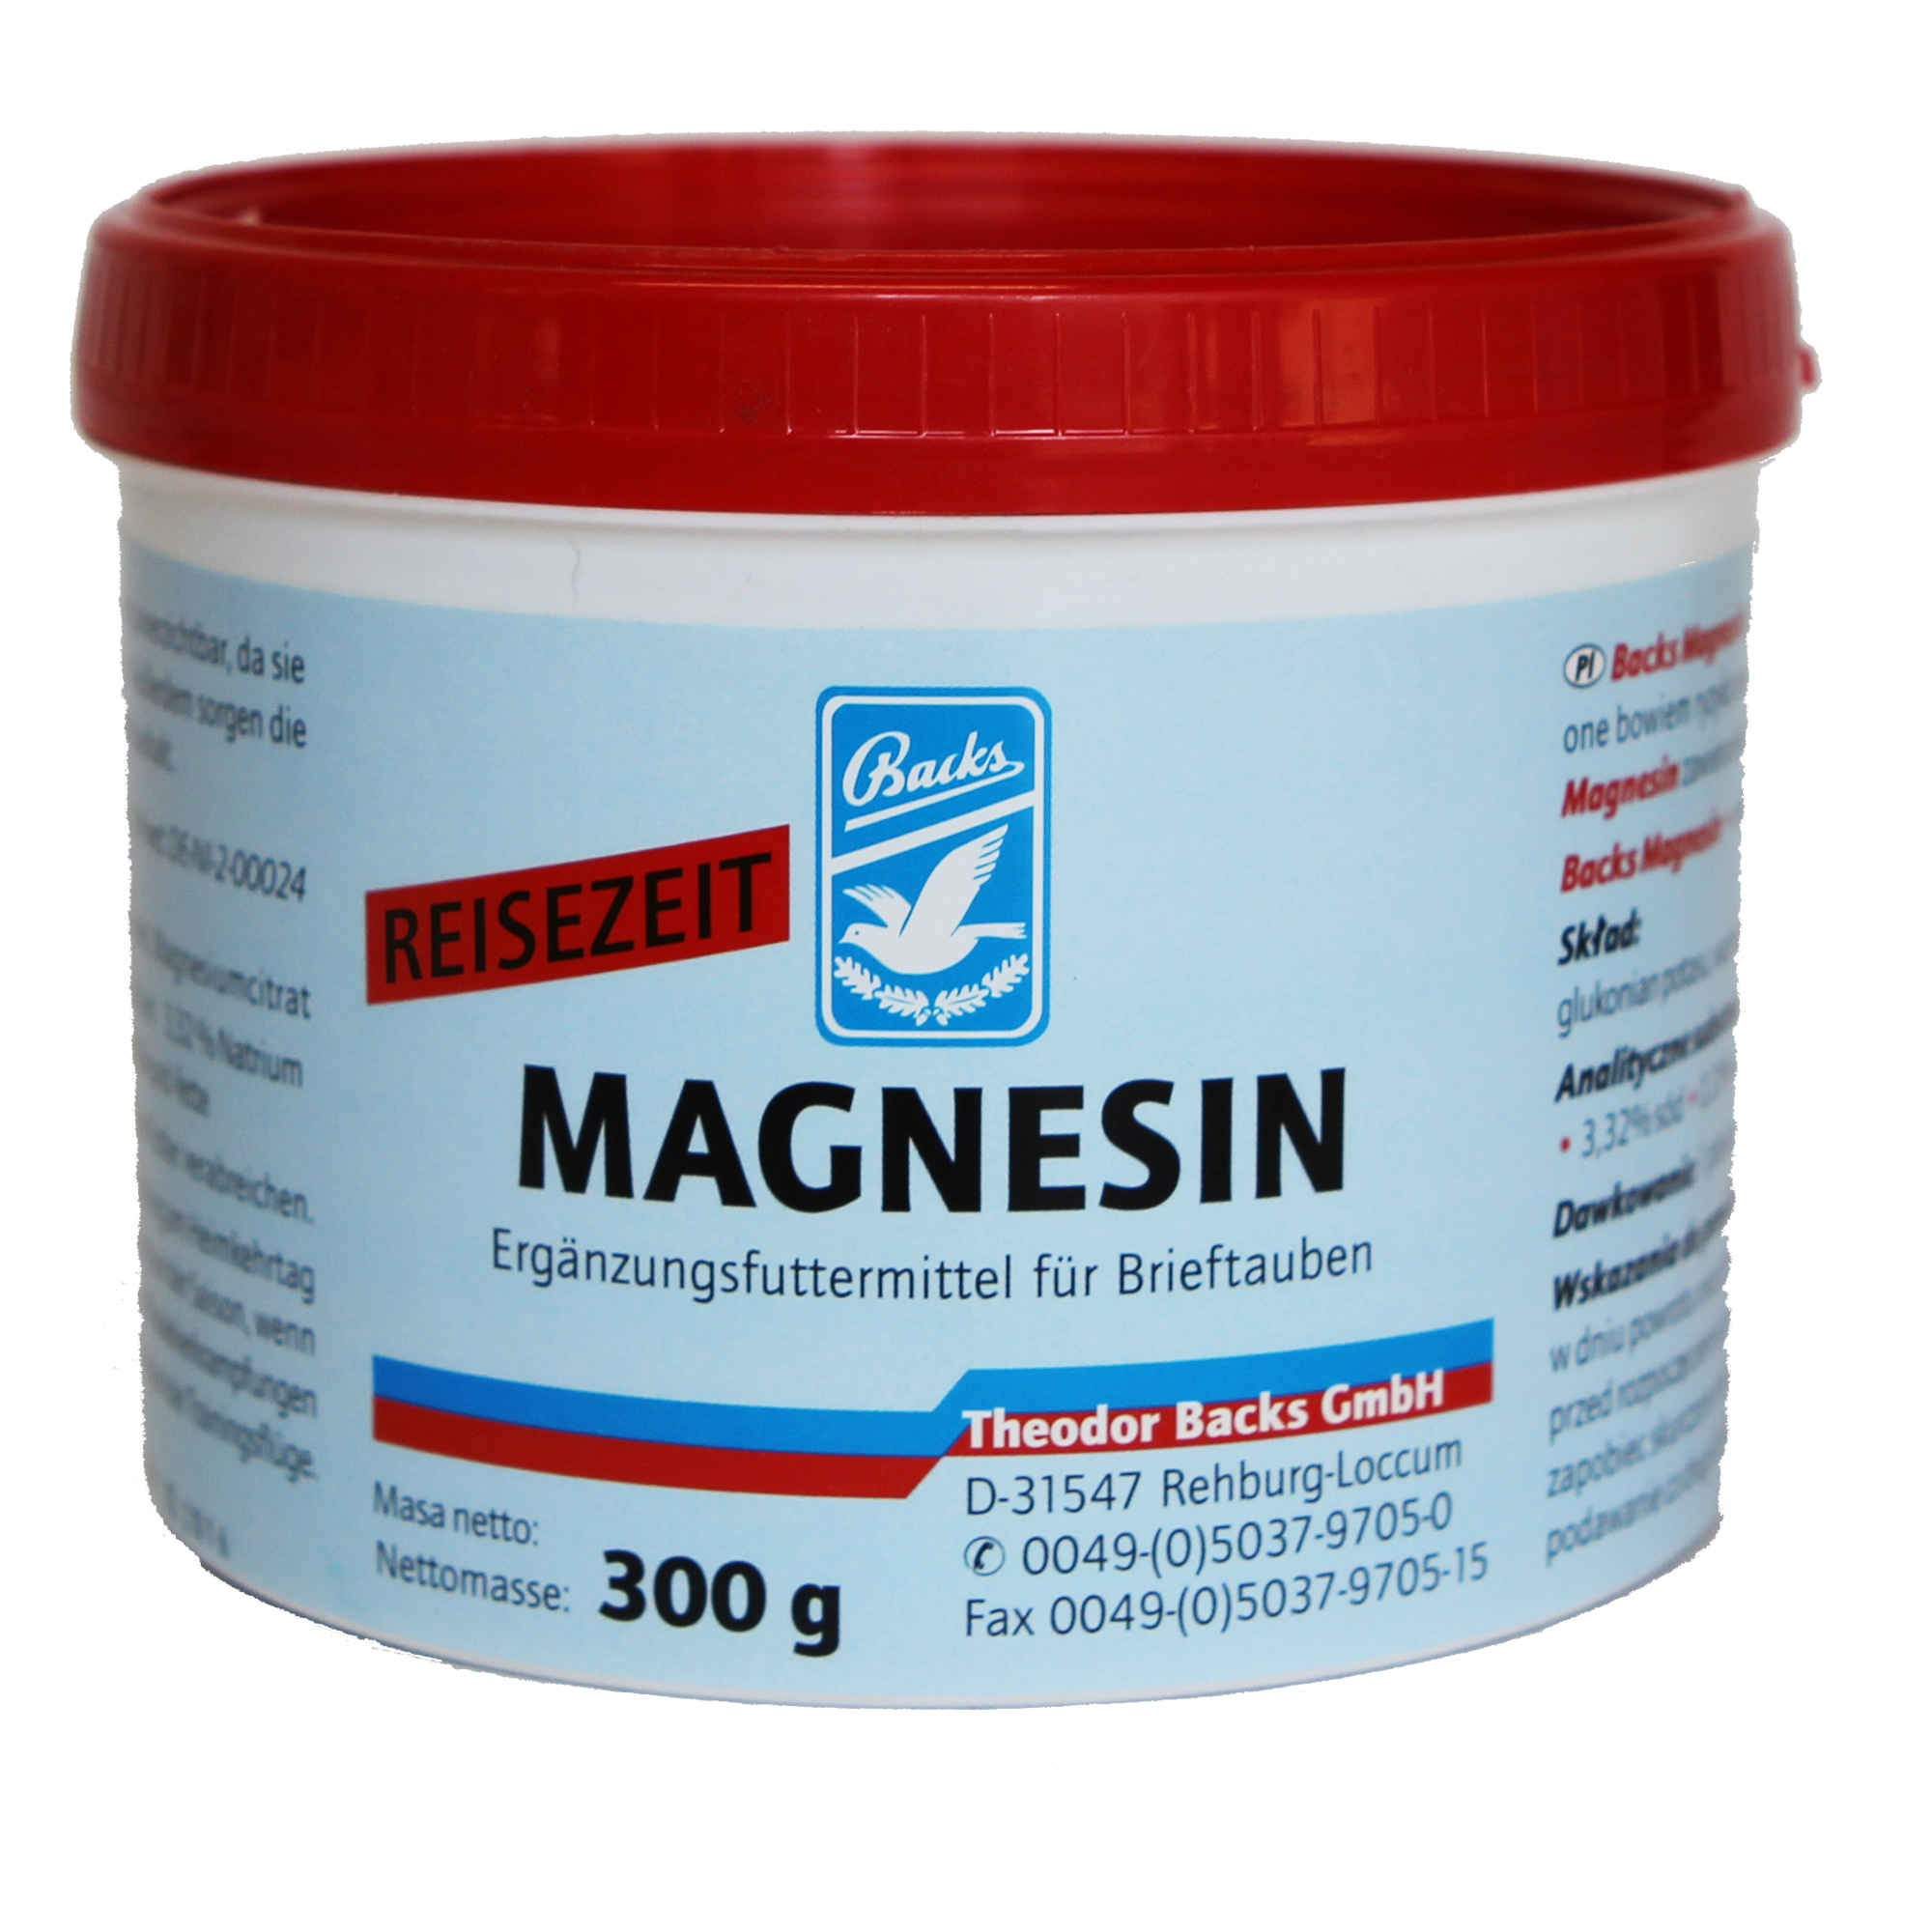 Backs Magnesin 300g für Haustiere im Tierfutterpro Shop